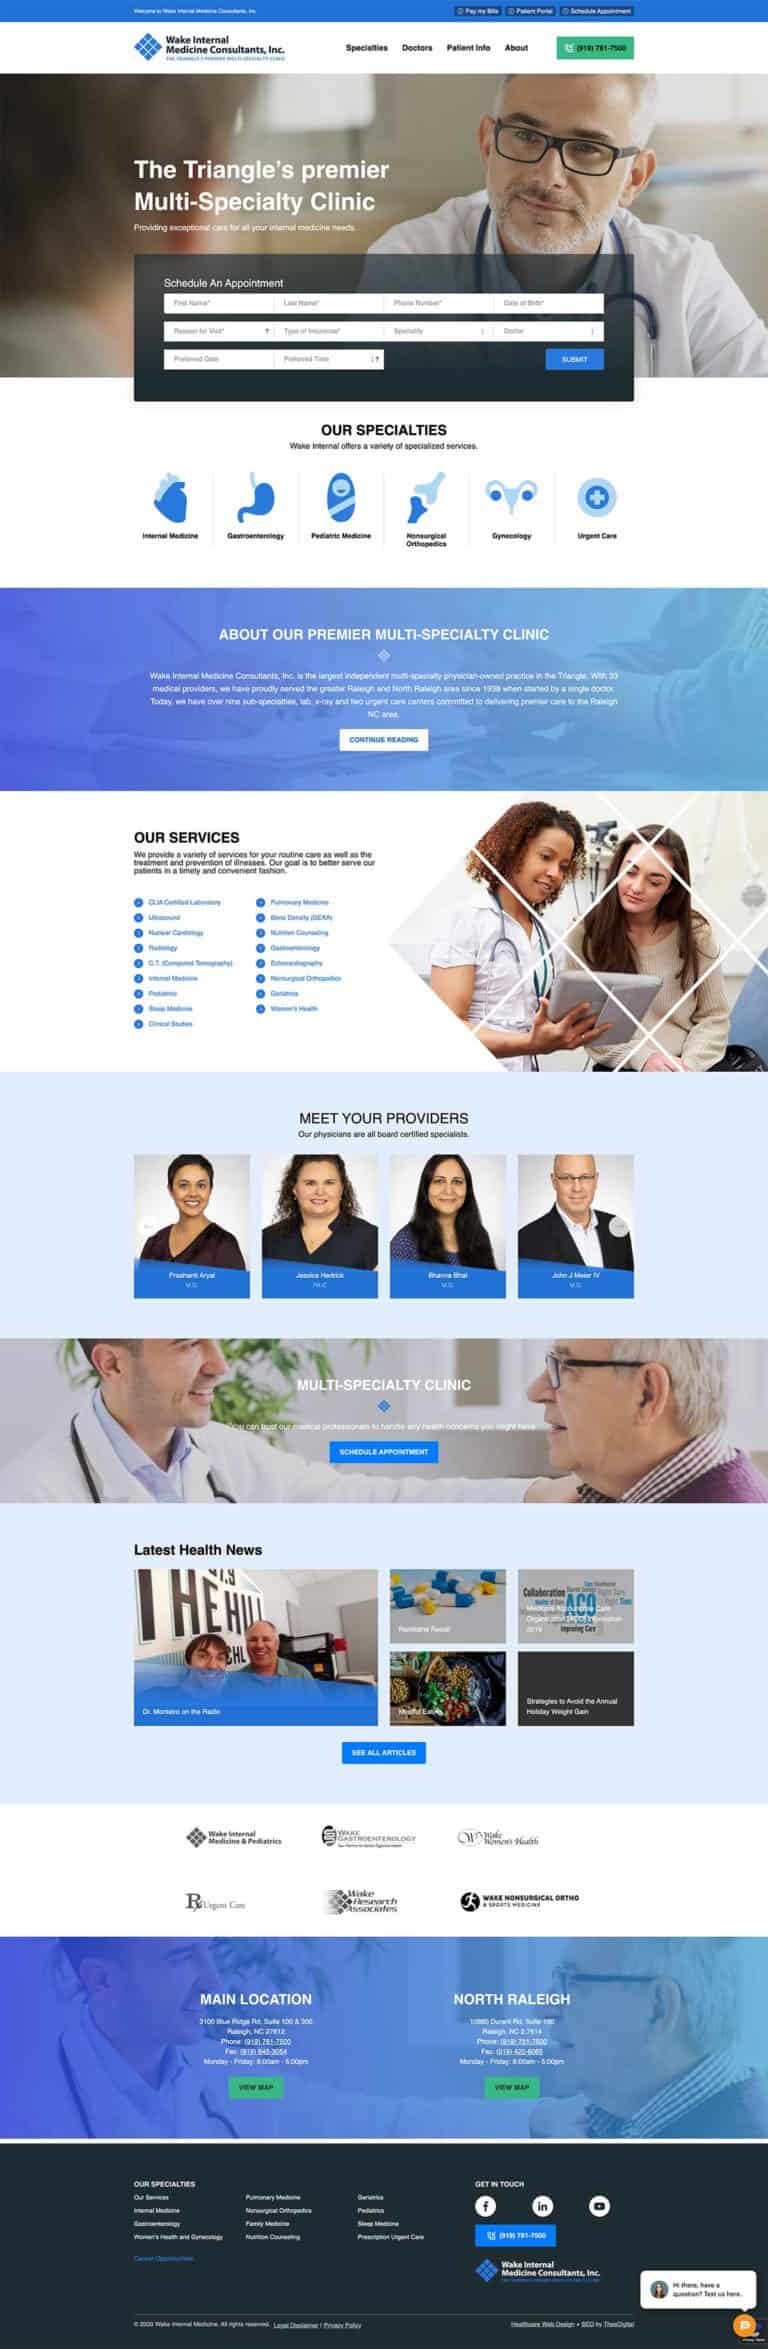 WordPress Web Design for a Healthcare Business